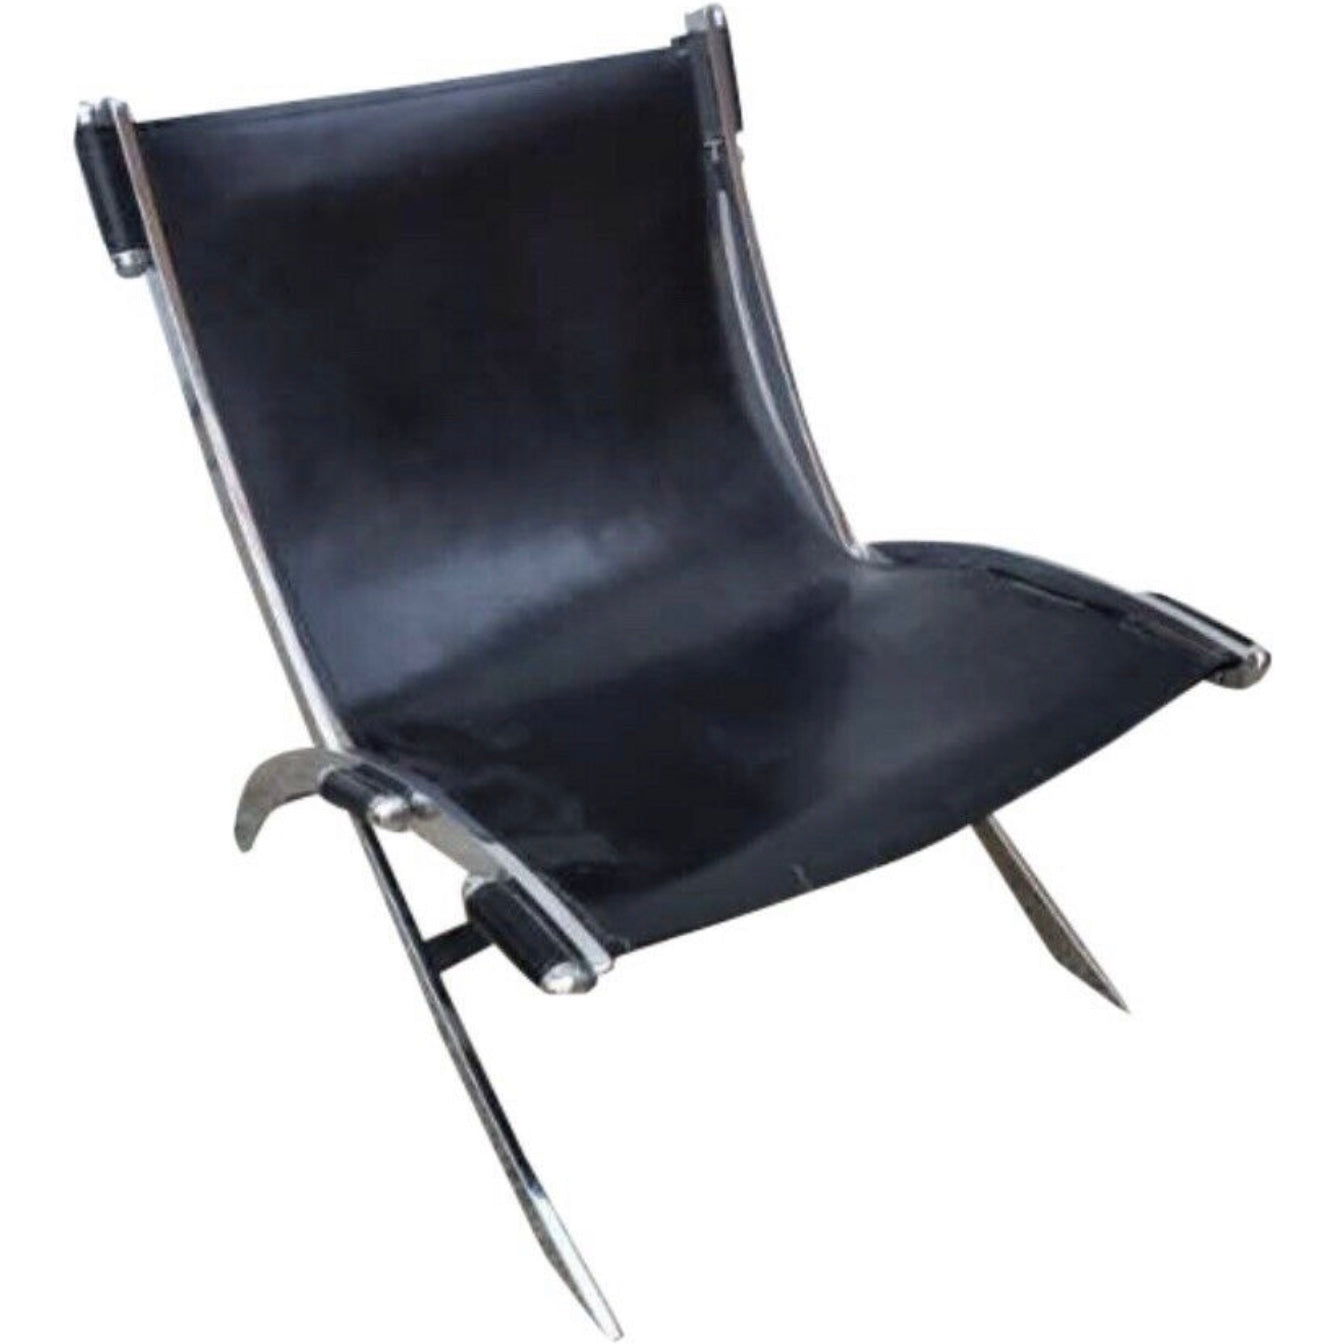 Antonio Citterio Lounge Chairs